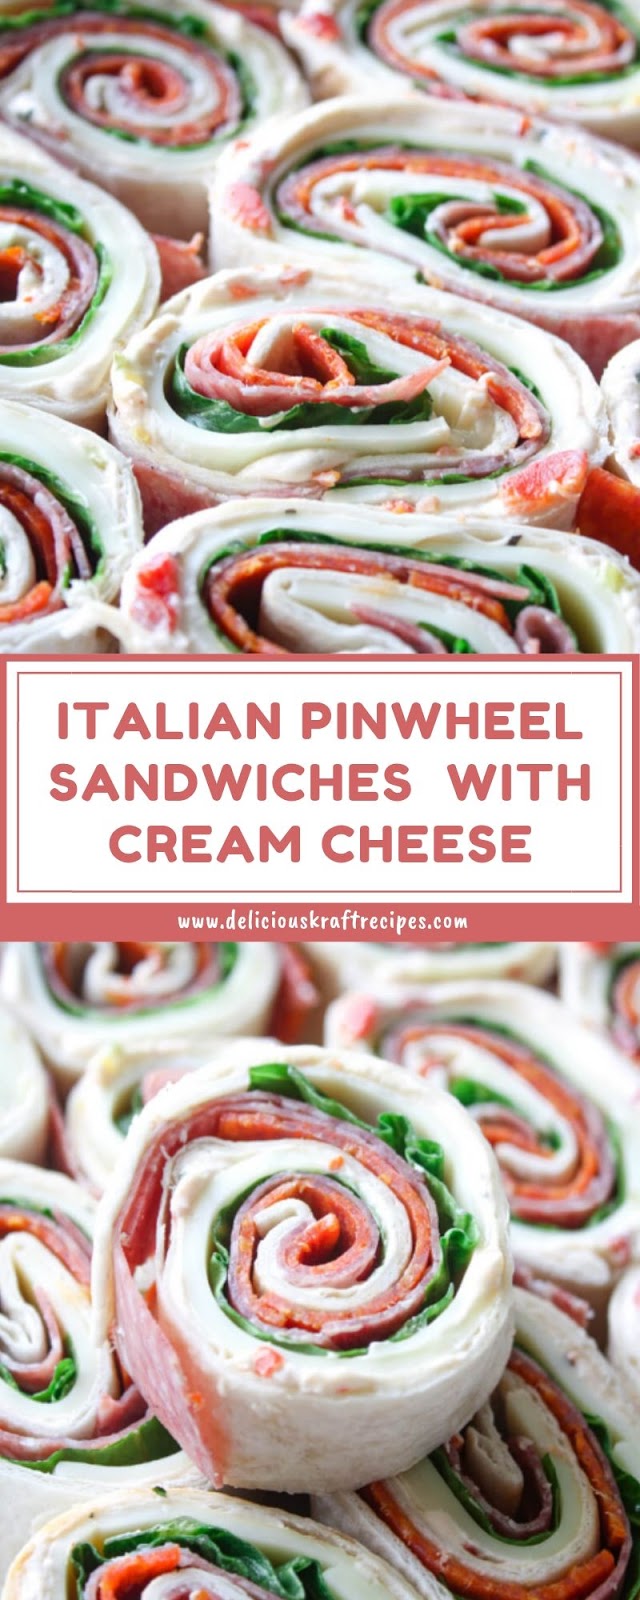 ITALIAN PINWHEEL SANDWICHES  WITH CREAM CHEESE